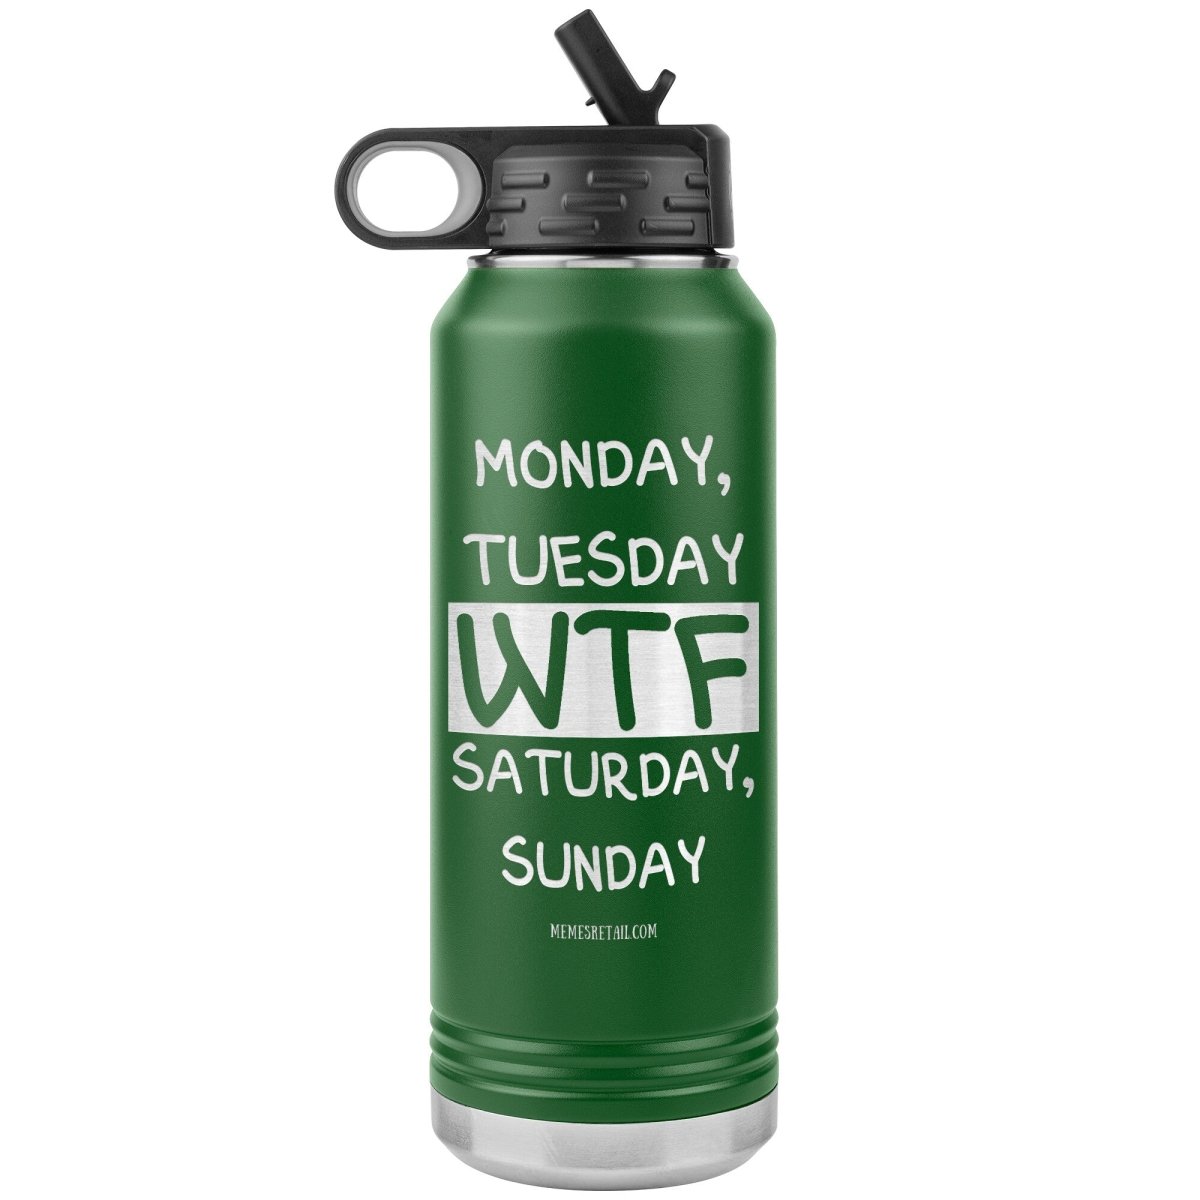 Monday, Tuesday, WTF, Saturday, Sunday 32 oz Water Tumbler, Green - MemesRetail.com